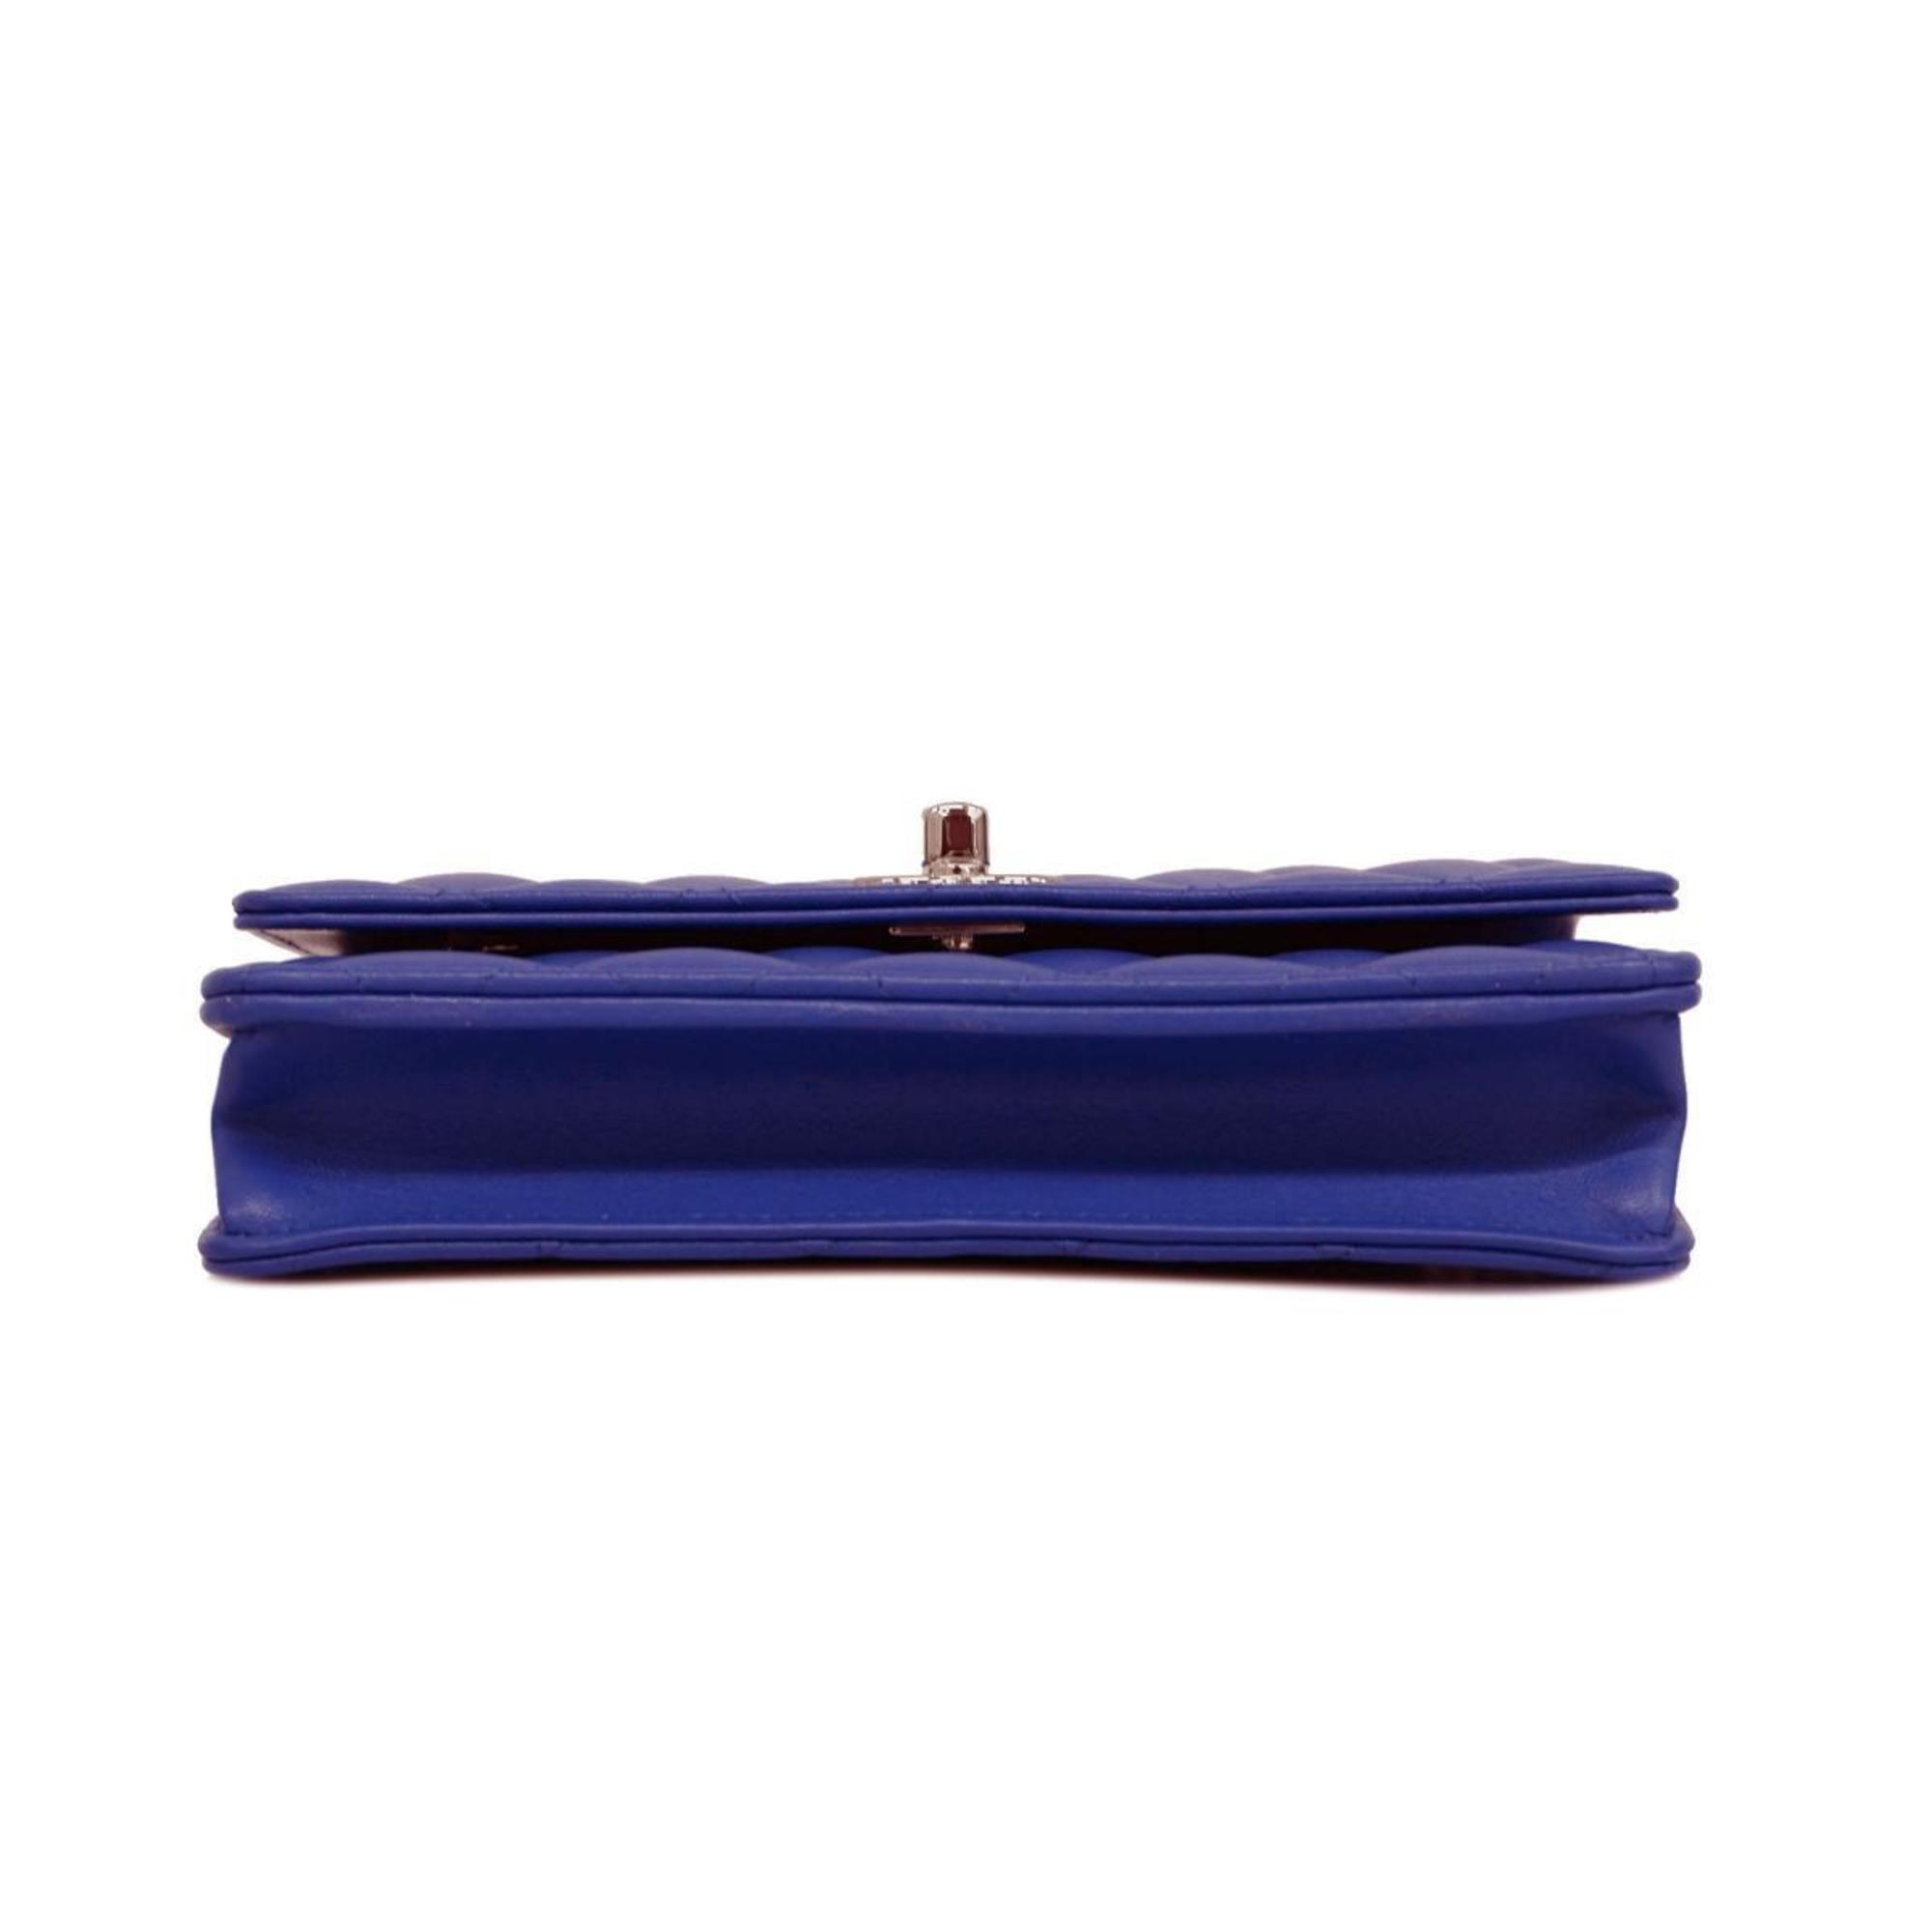 Chanel Shoulder Bag, Matelasse, Chain Shoulder, Lambskin, Blue, Women's